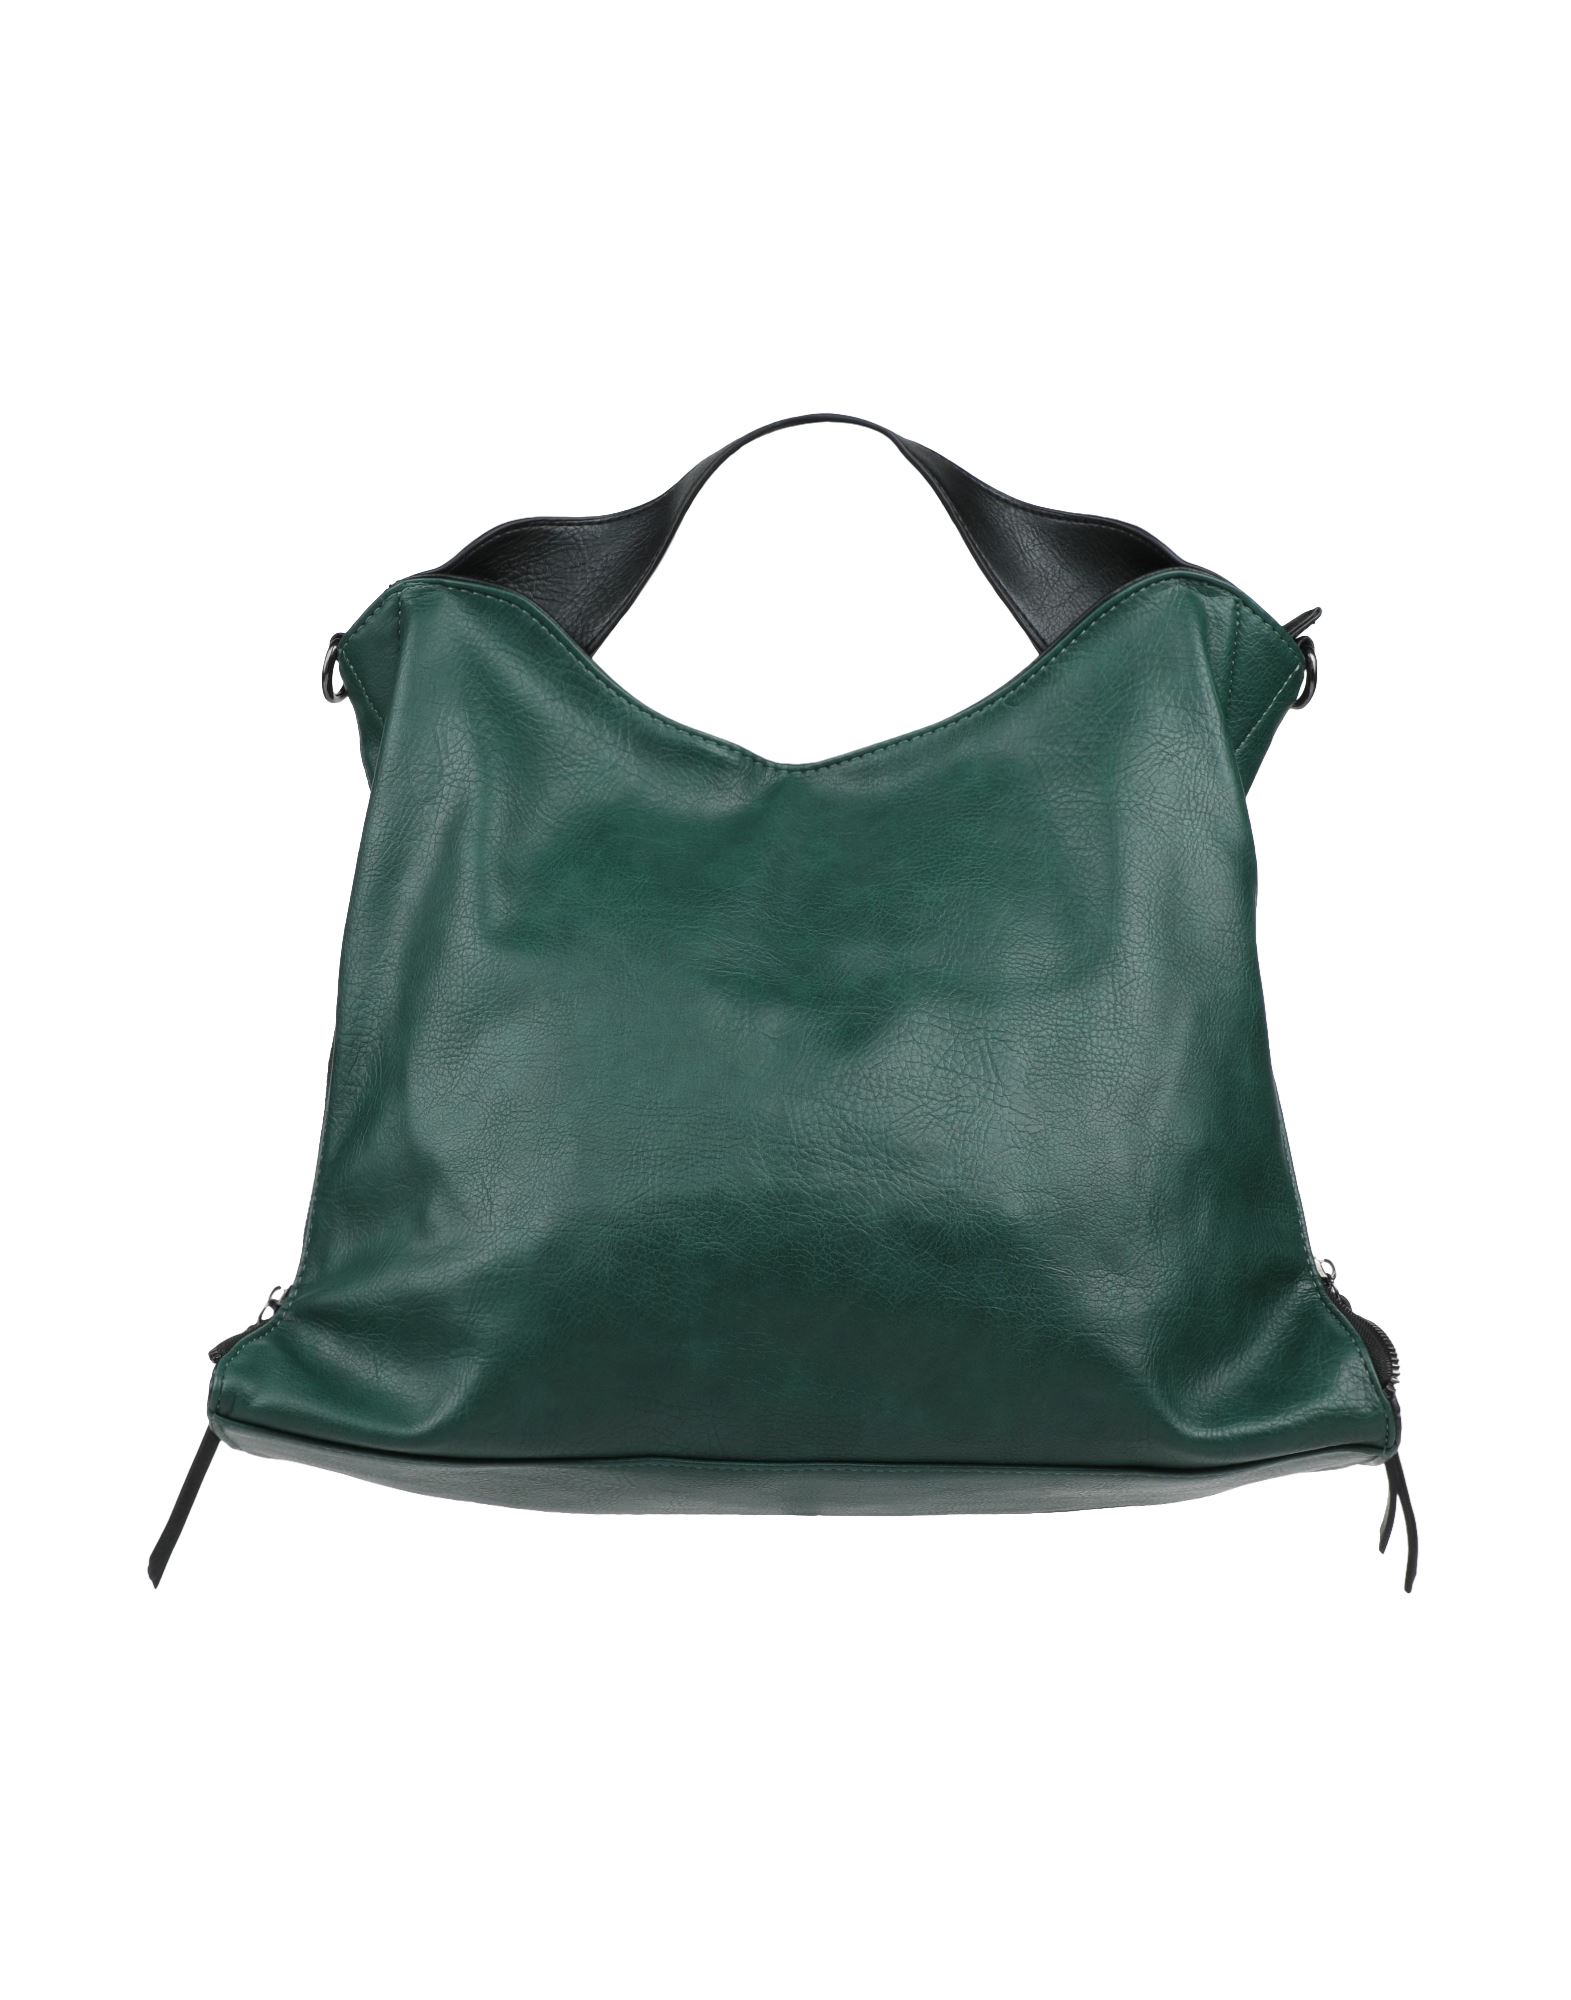 Maury Handbags In Green